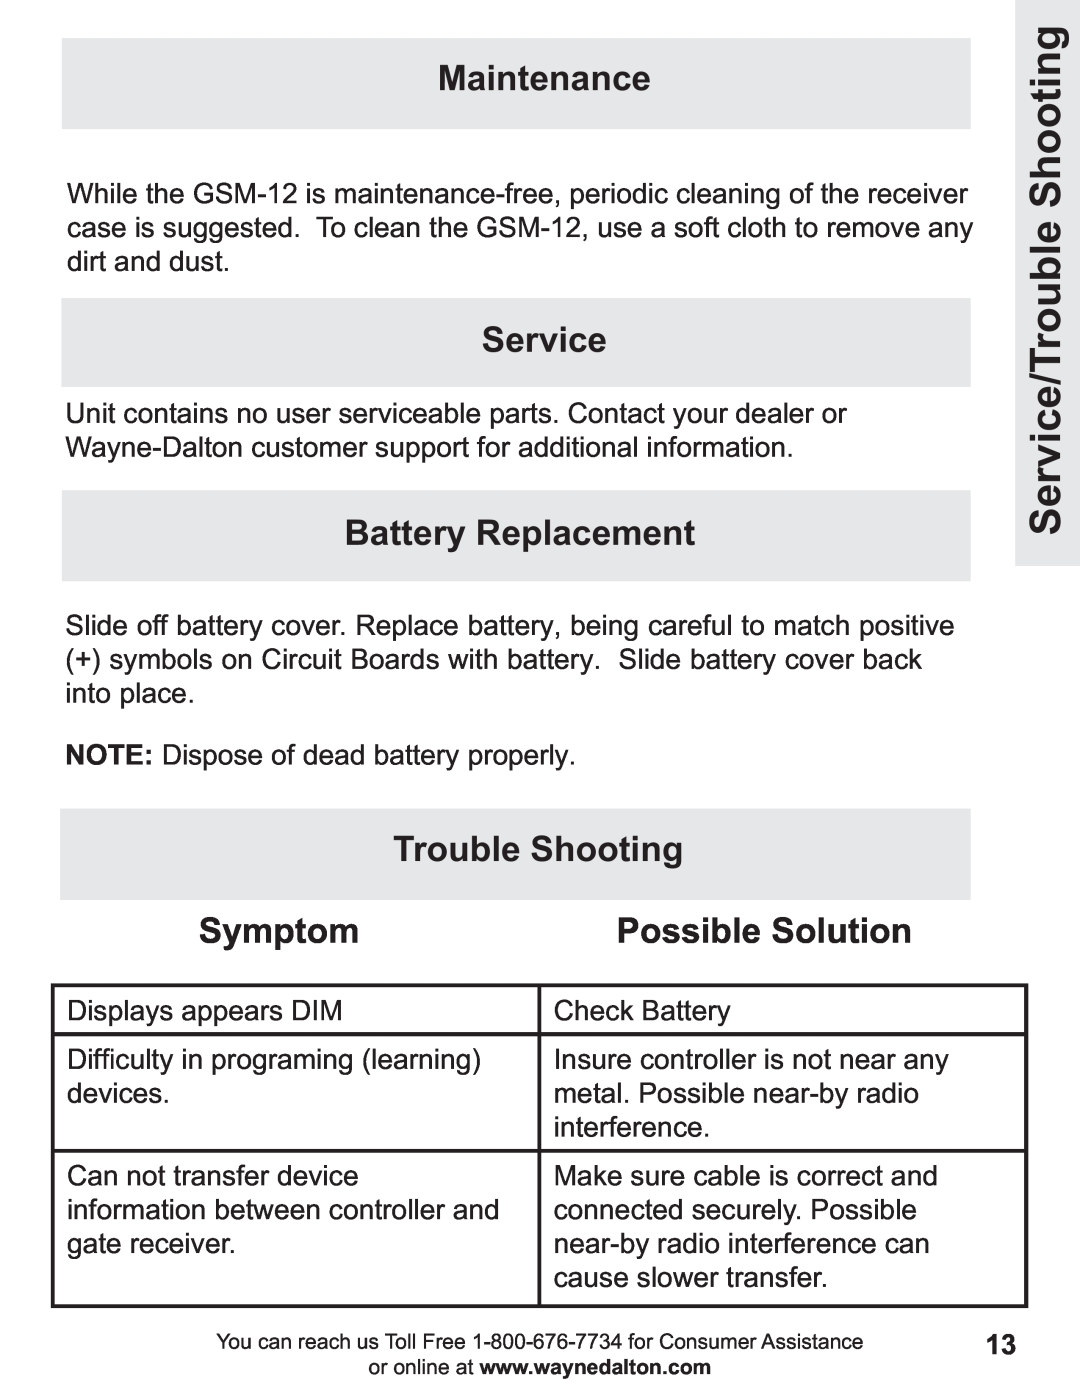 Wayne-Dalton GSM-12 Service/Trouble Shooting, Maintenance, Battery Replacement, Symptom, Possible Solution 